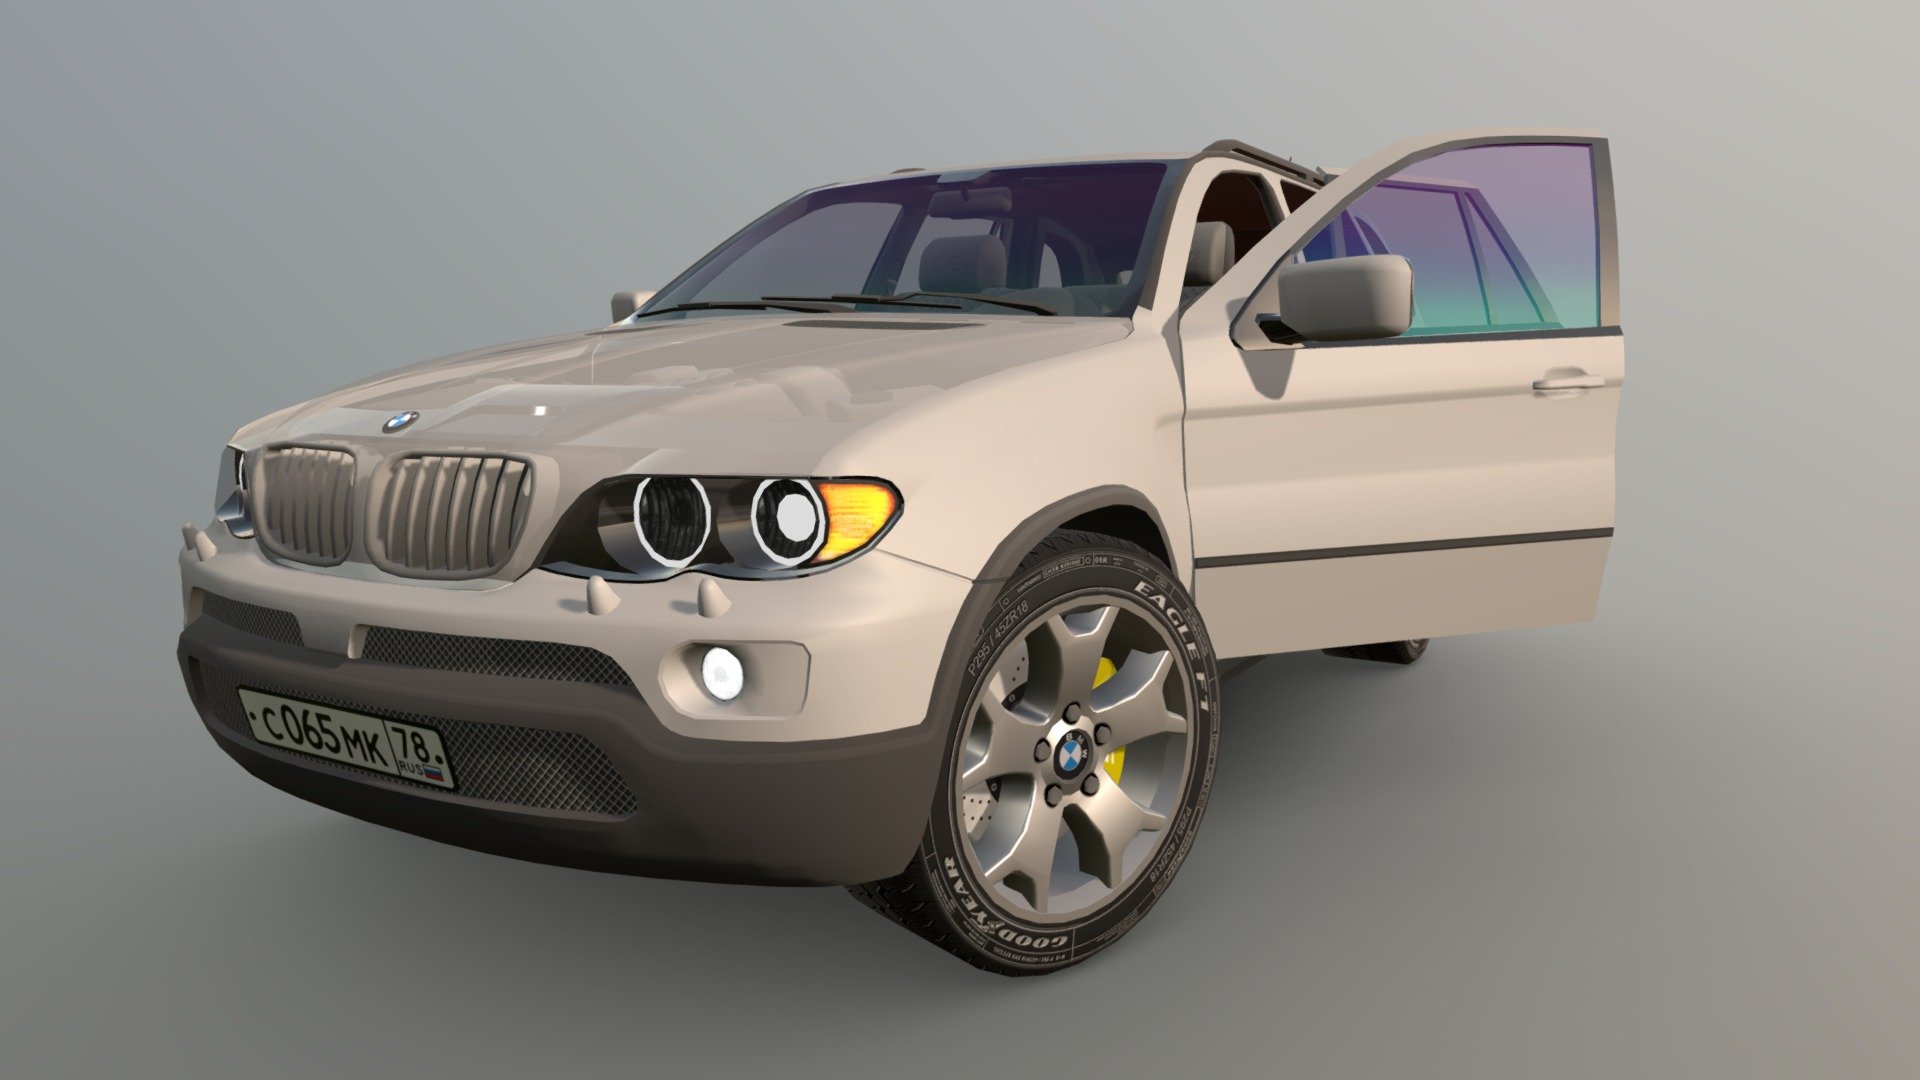 Low poly model. HQ interior. Optimized textures. Baked AO. Body - 1mat. 2048 texture. Wheels - 1mat. 512 texture - BMW X5 E53 - 3D model by OG Customs (@og_customs) 3d model